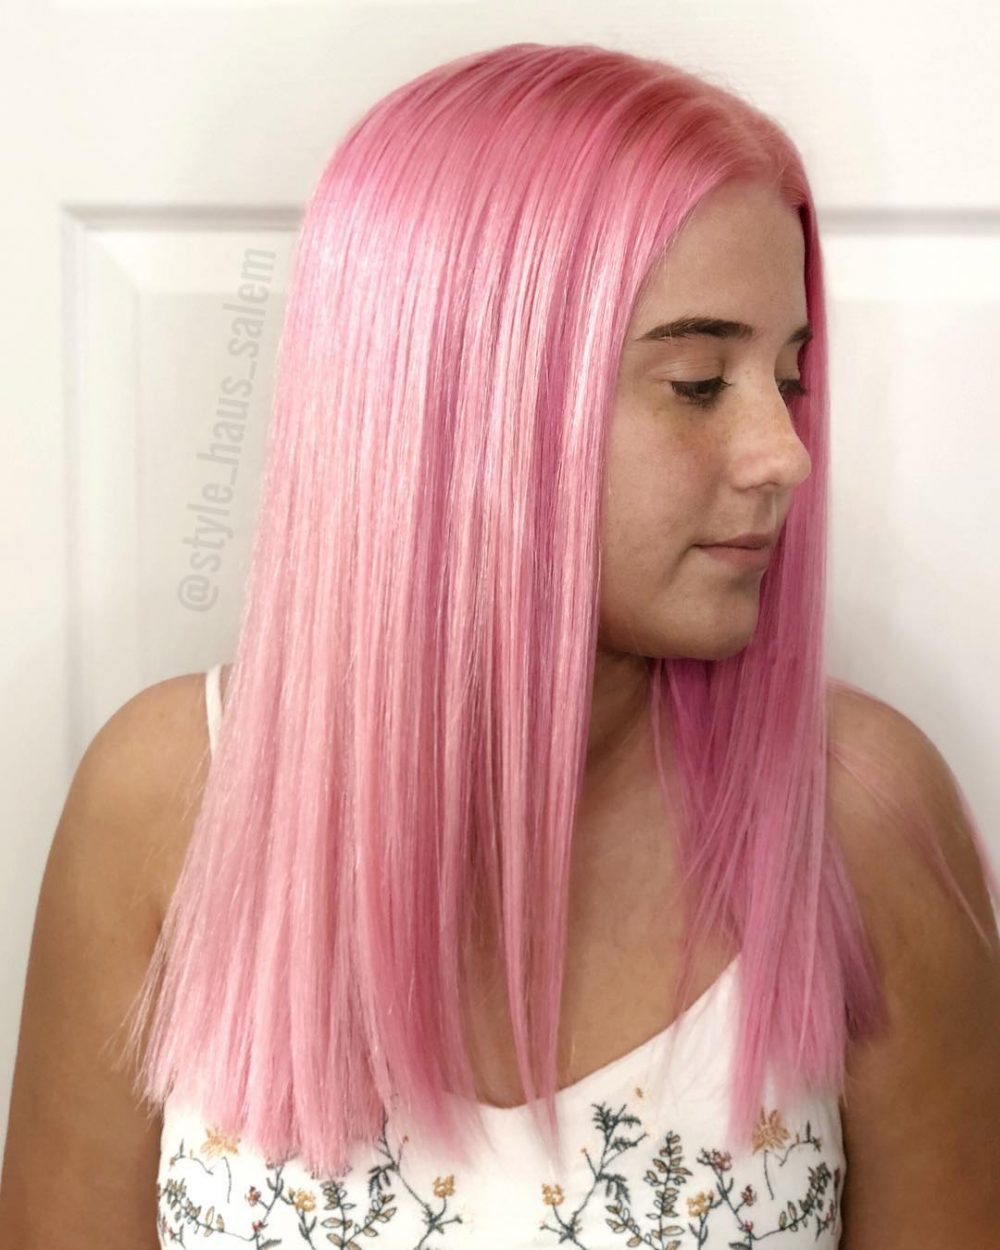 Barbie Pink, AKA The Millennial Pink Hair